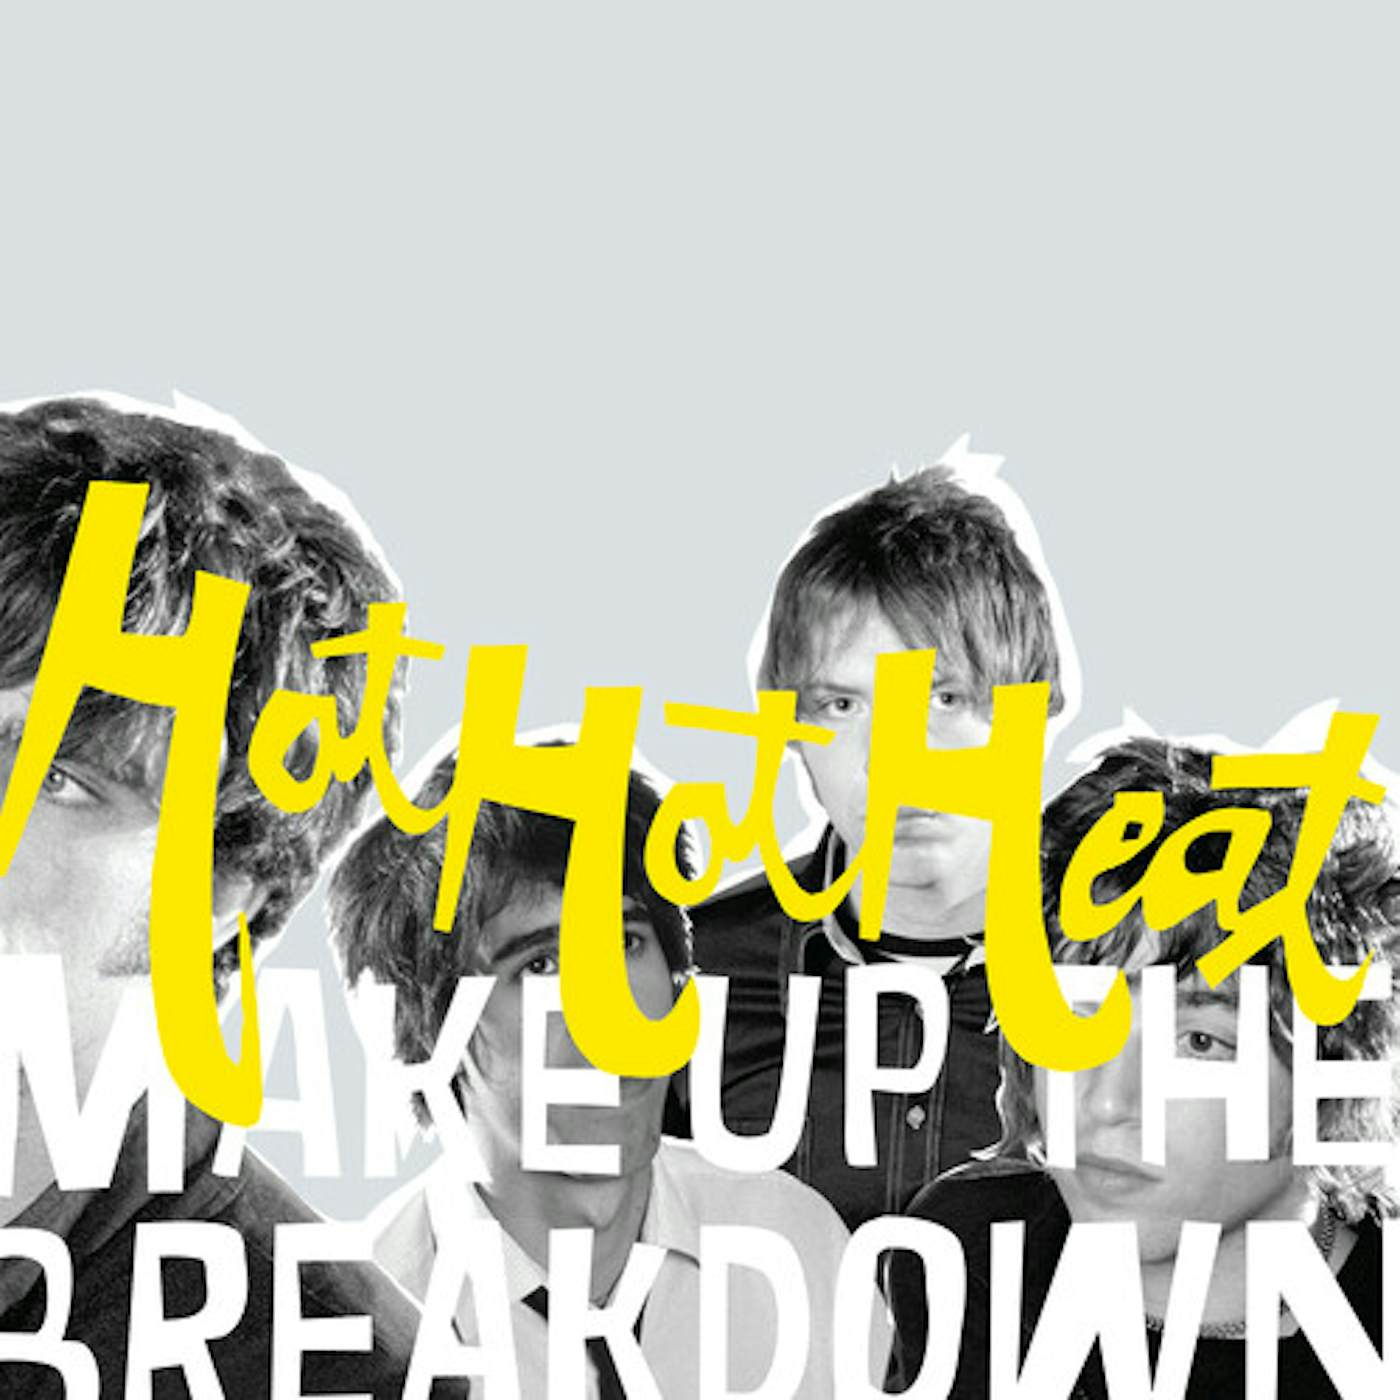 Hot Hot Heat MAKE UP THE BREAKDOWN - OPAQUE YELLOW Vinyl Record